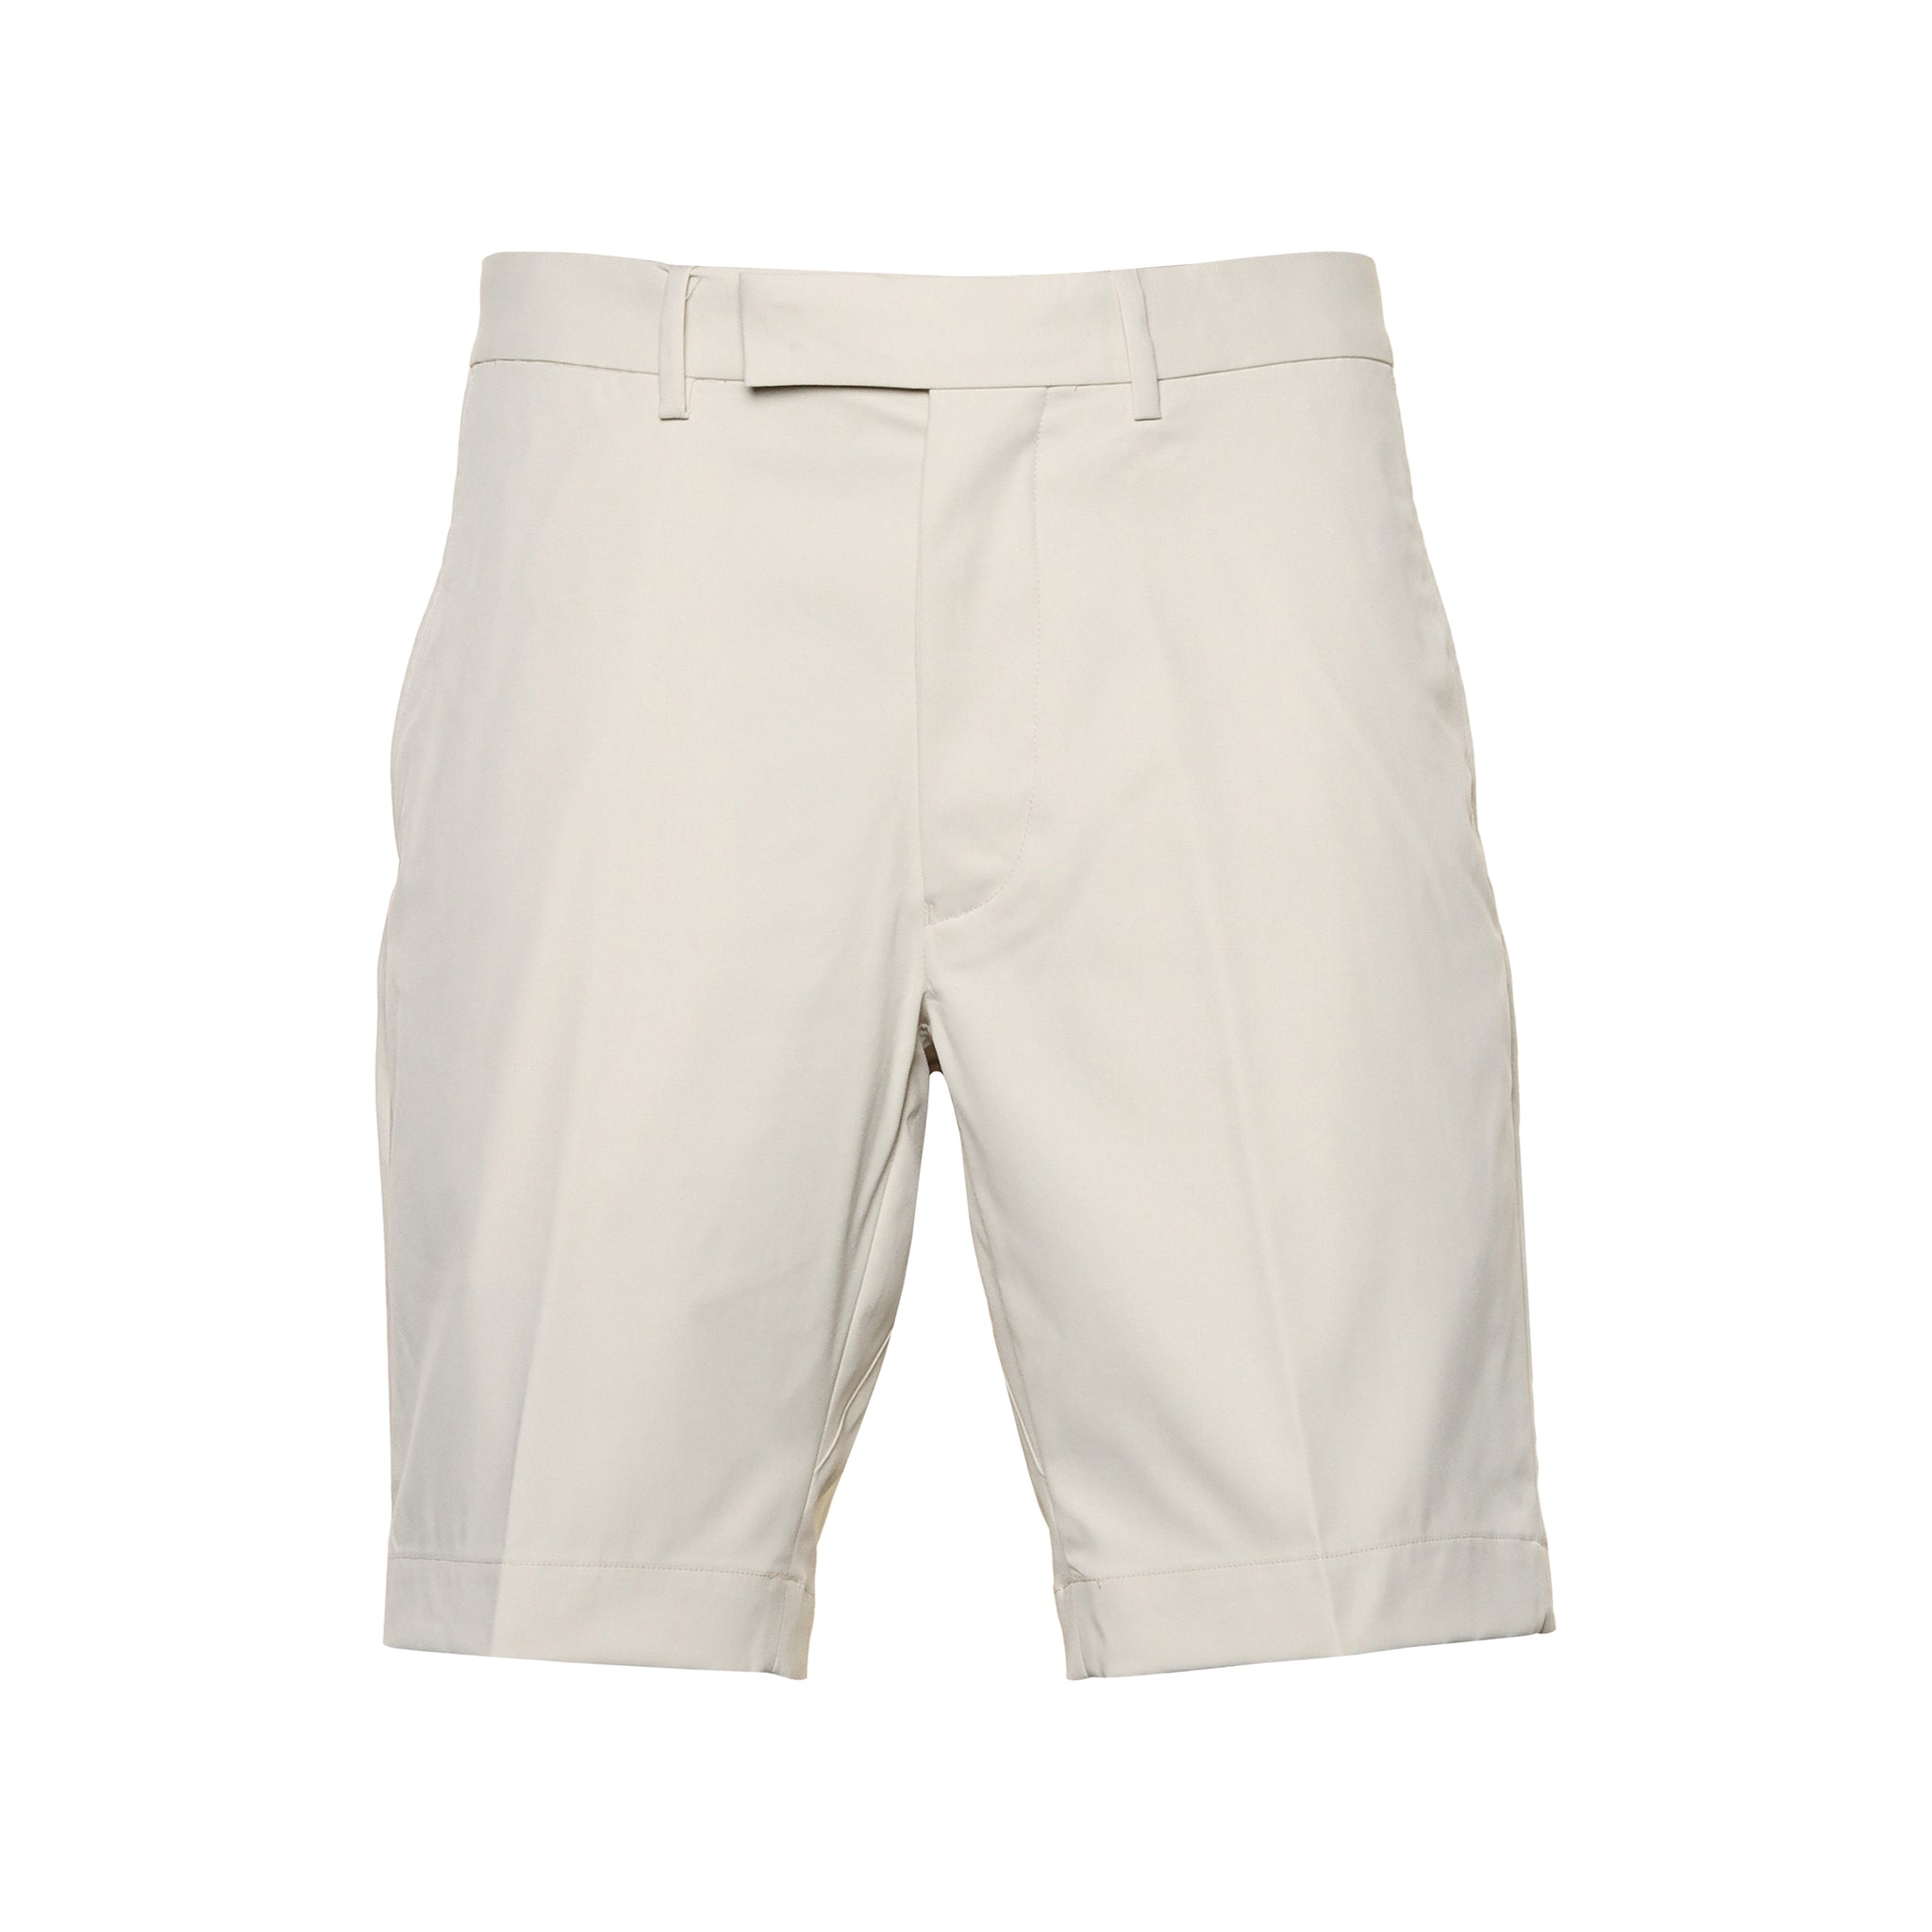 rlx-ralph-lauren-stretch-tailored-fit-shorts-785927986-basic-sand-002